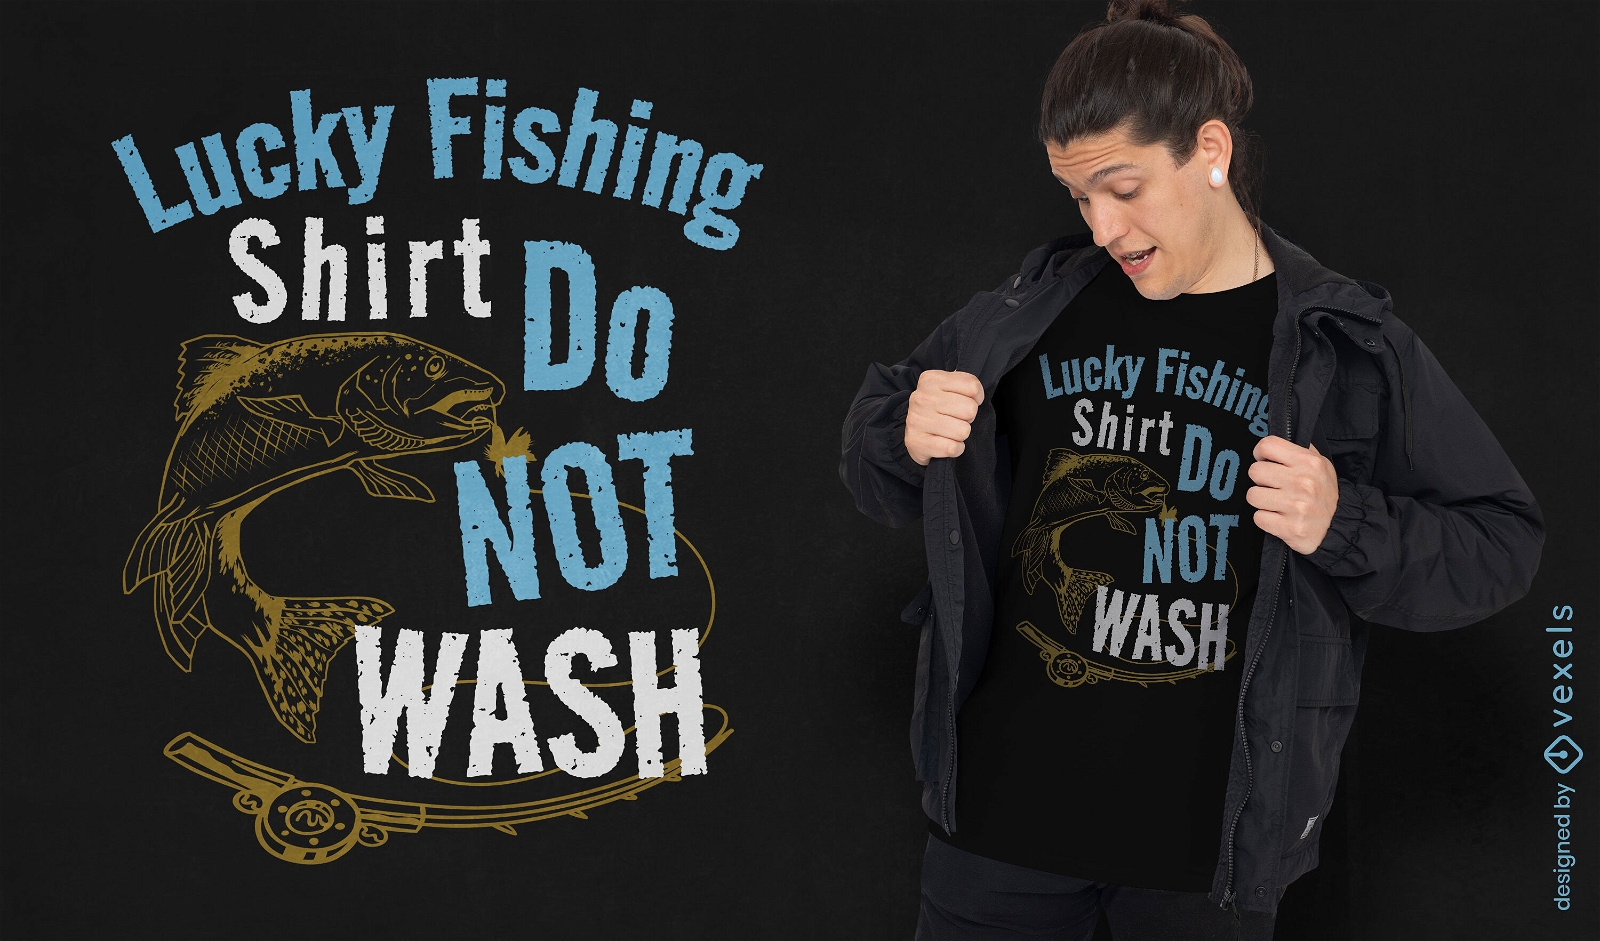 Dise?o de camiseta con lema de pesca de la suerte.